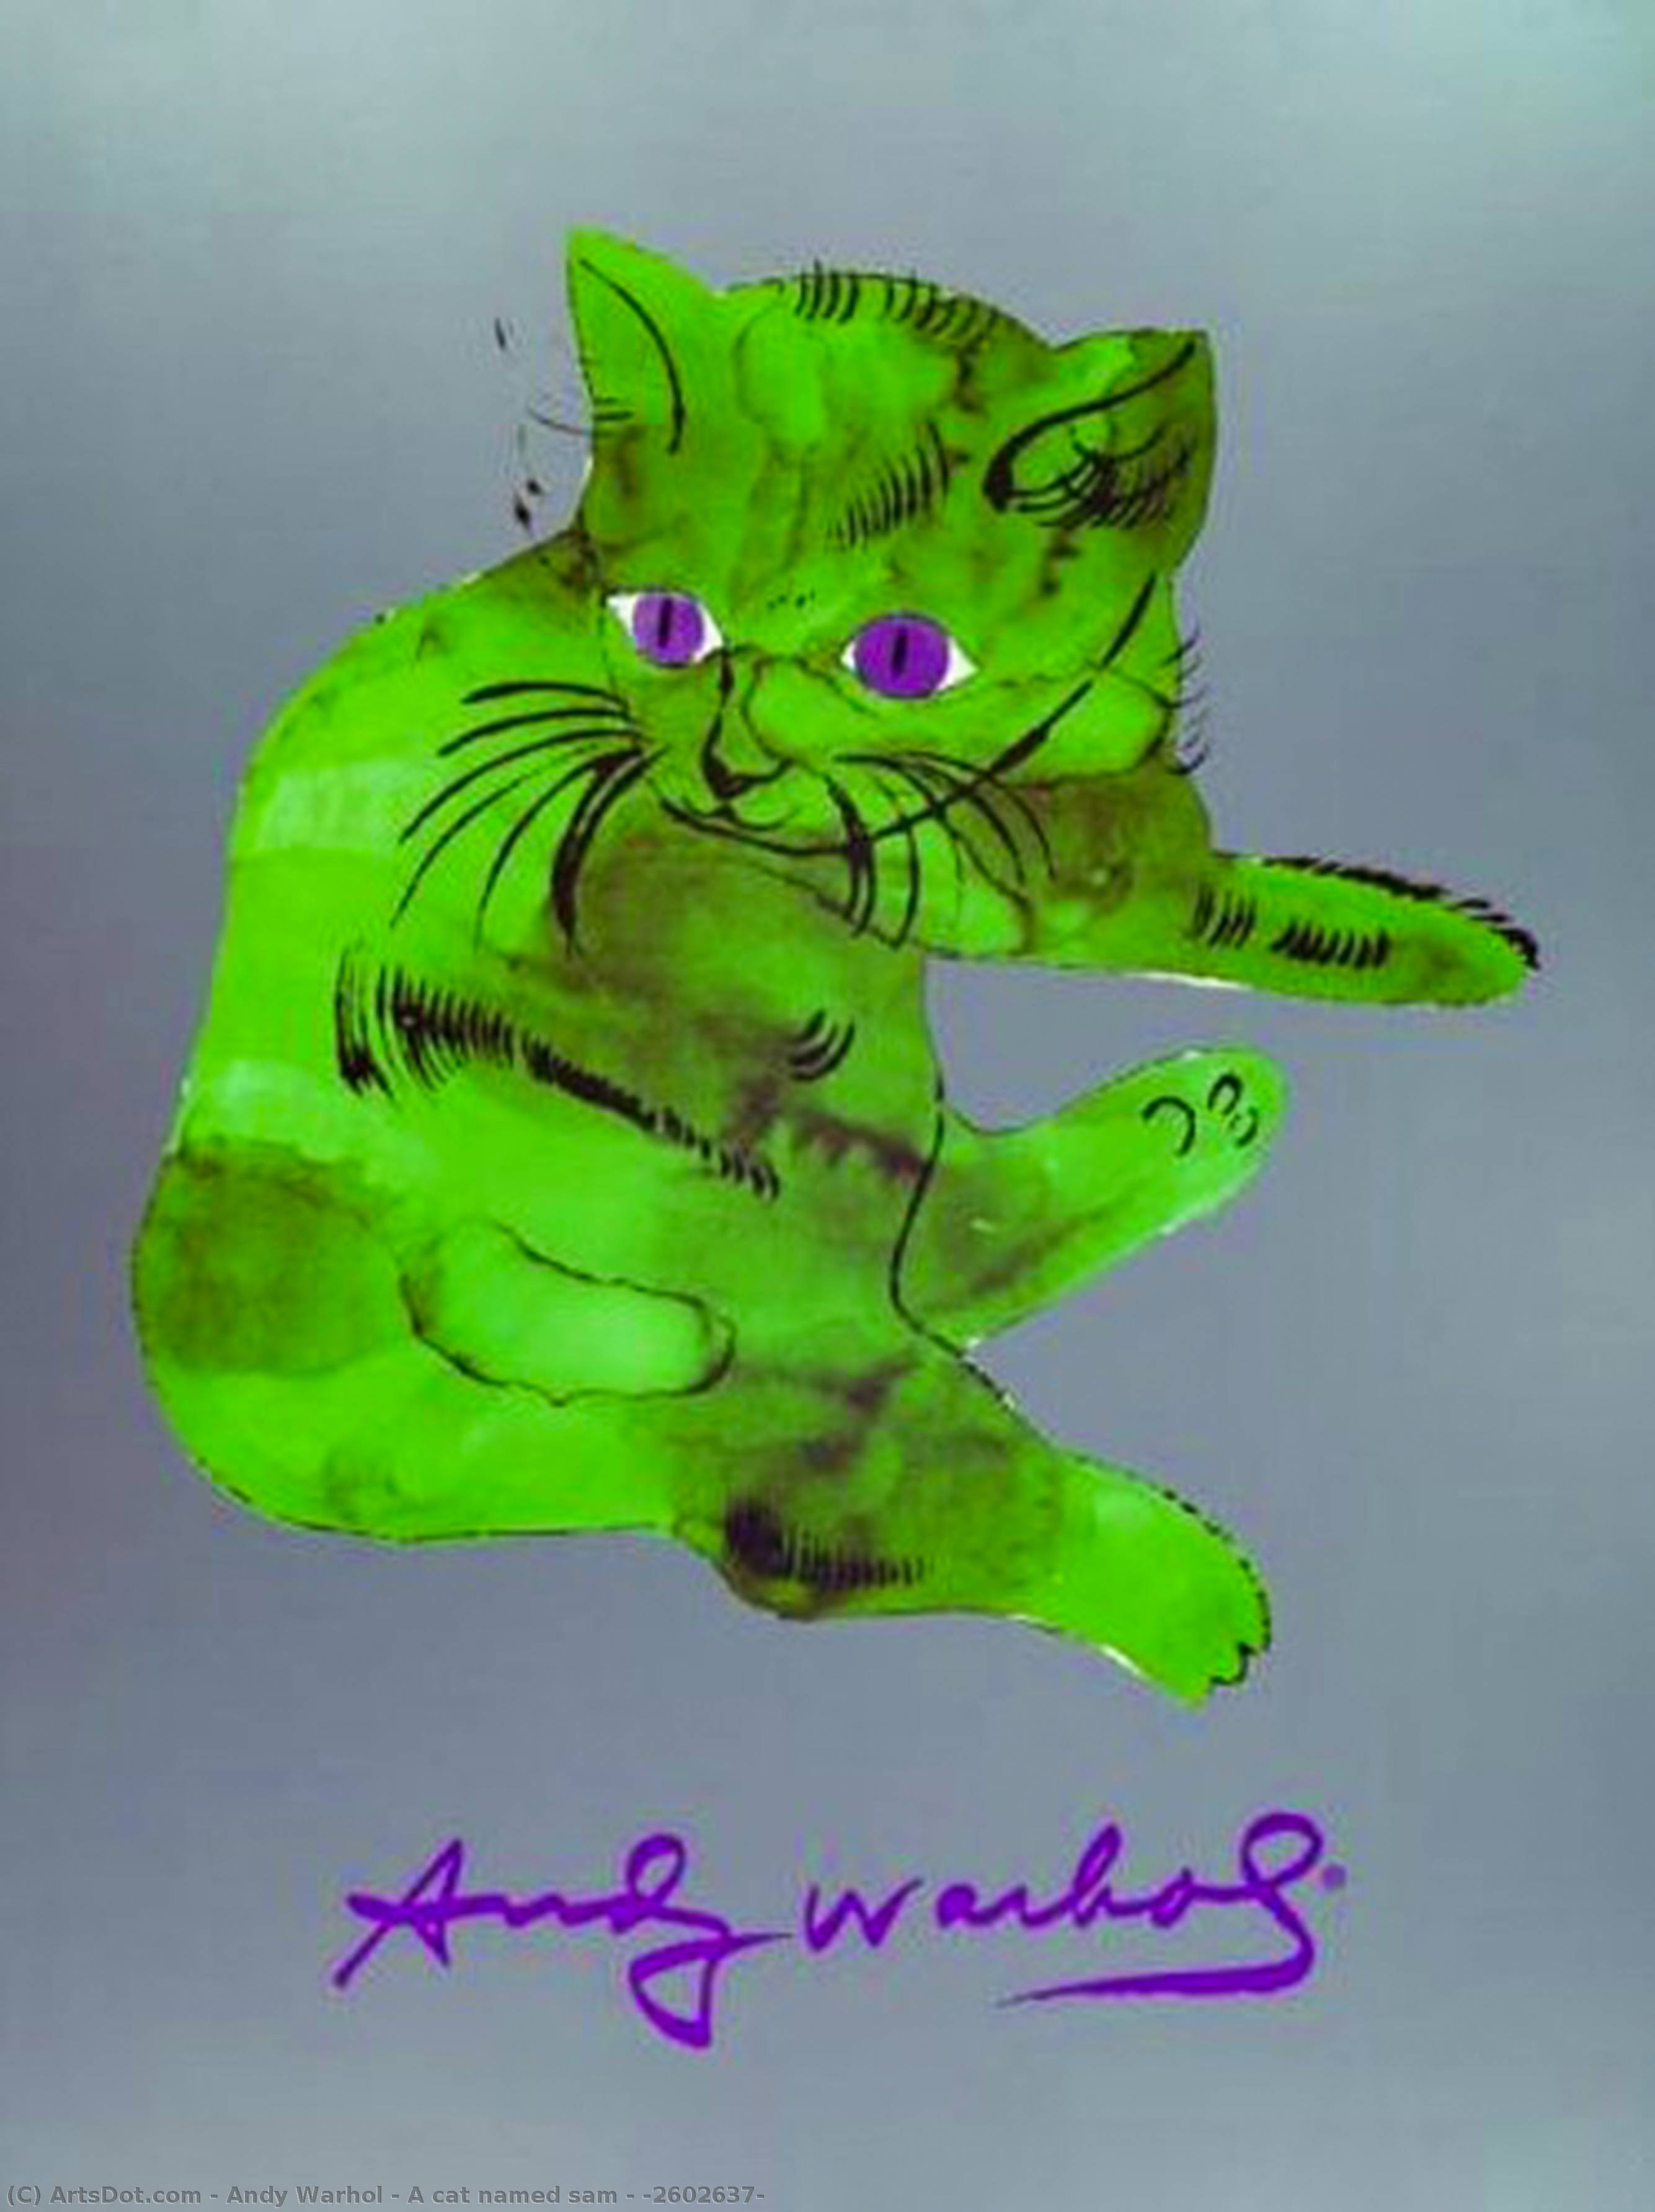 WikiOO.org - Енциклопедія образотворчого мистецтва - Живопис, Картини
 Andy Warhol - A cat named sam - (2602637)